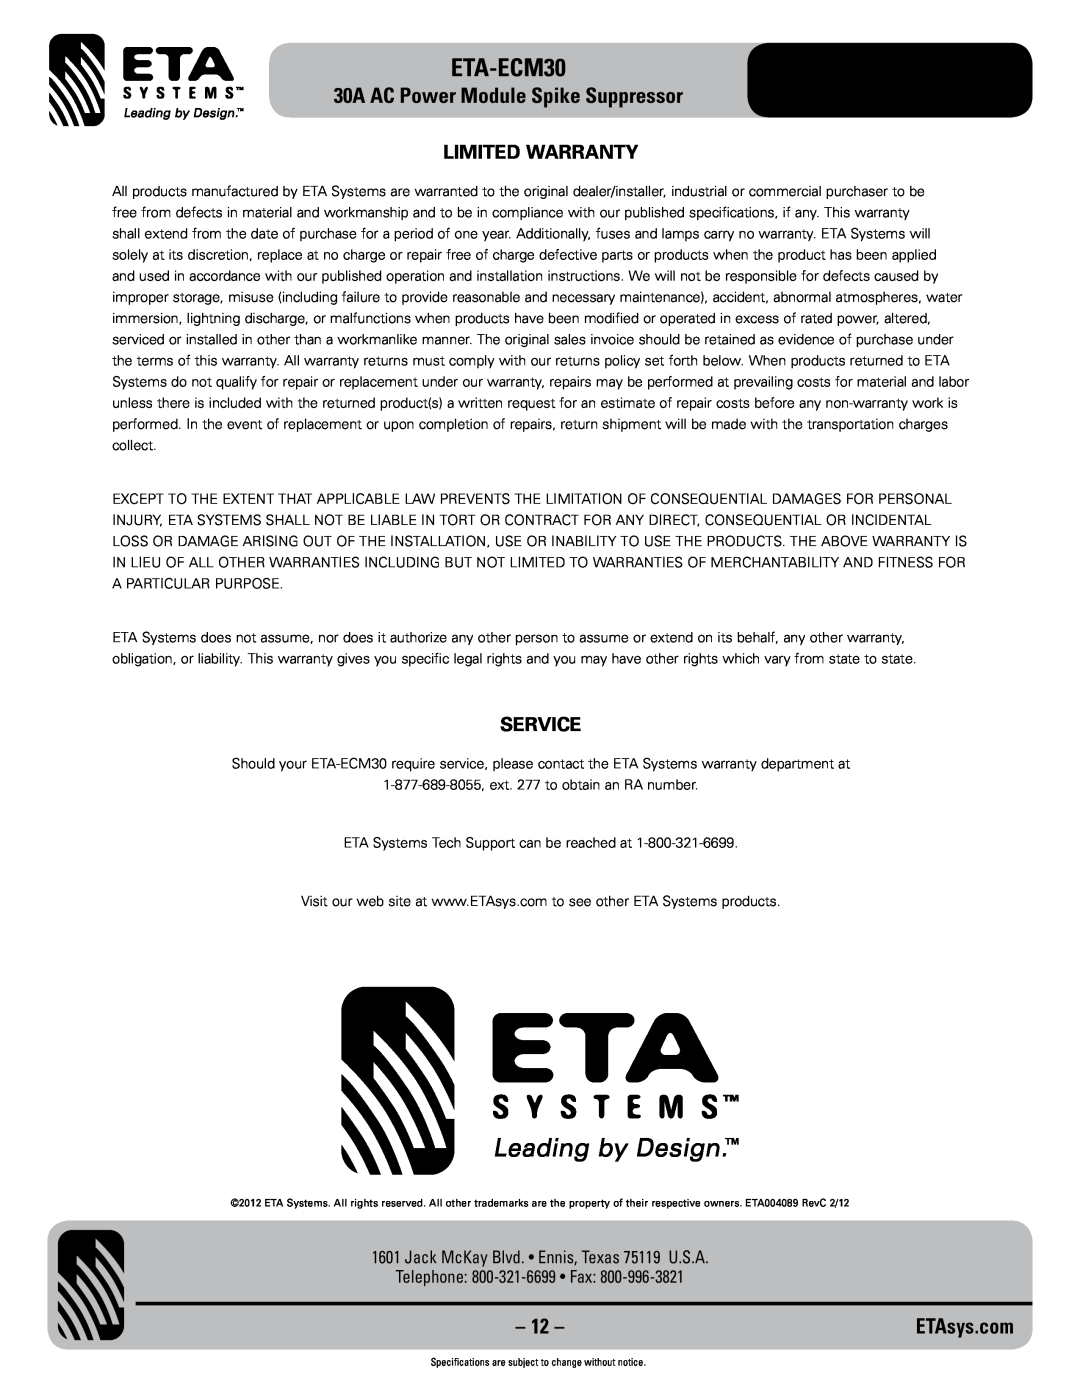 ETA Systems ETA-ECM30 Limited Warranty, Service, 30A AC Power Module Spike Suppressor, Telephone 800-321-6699 Fax 